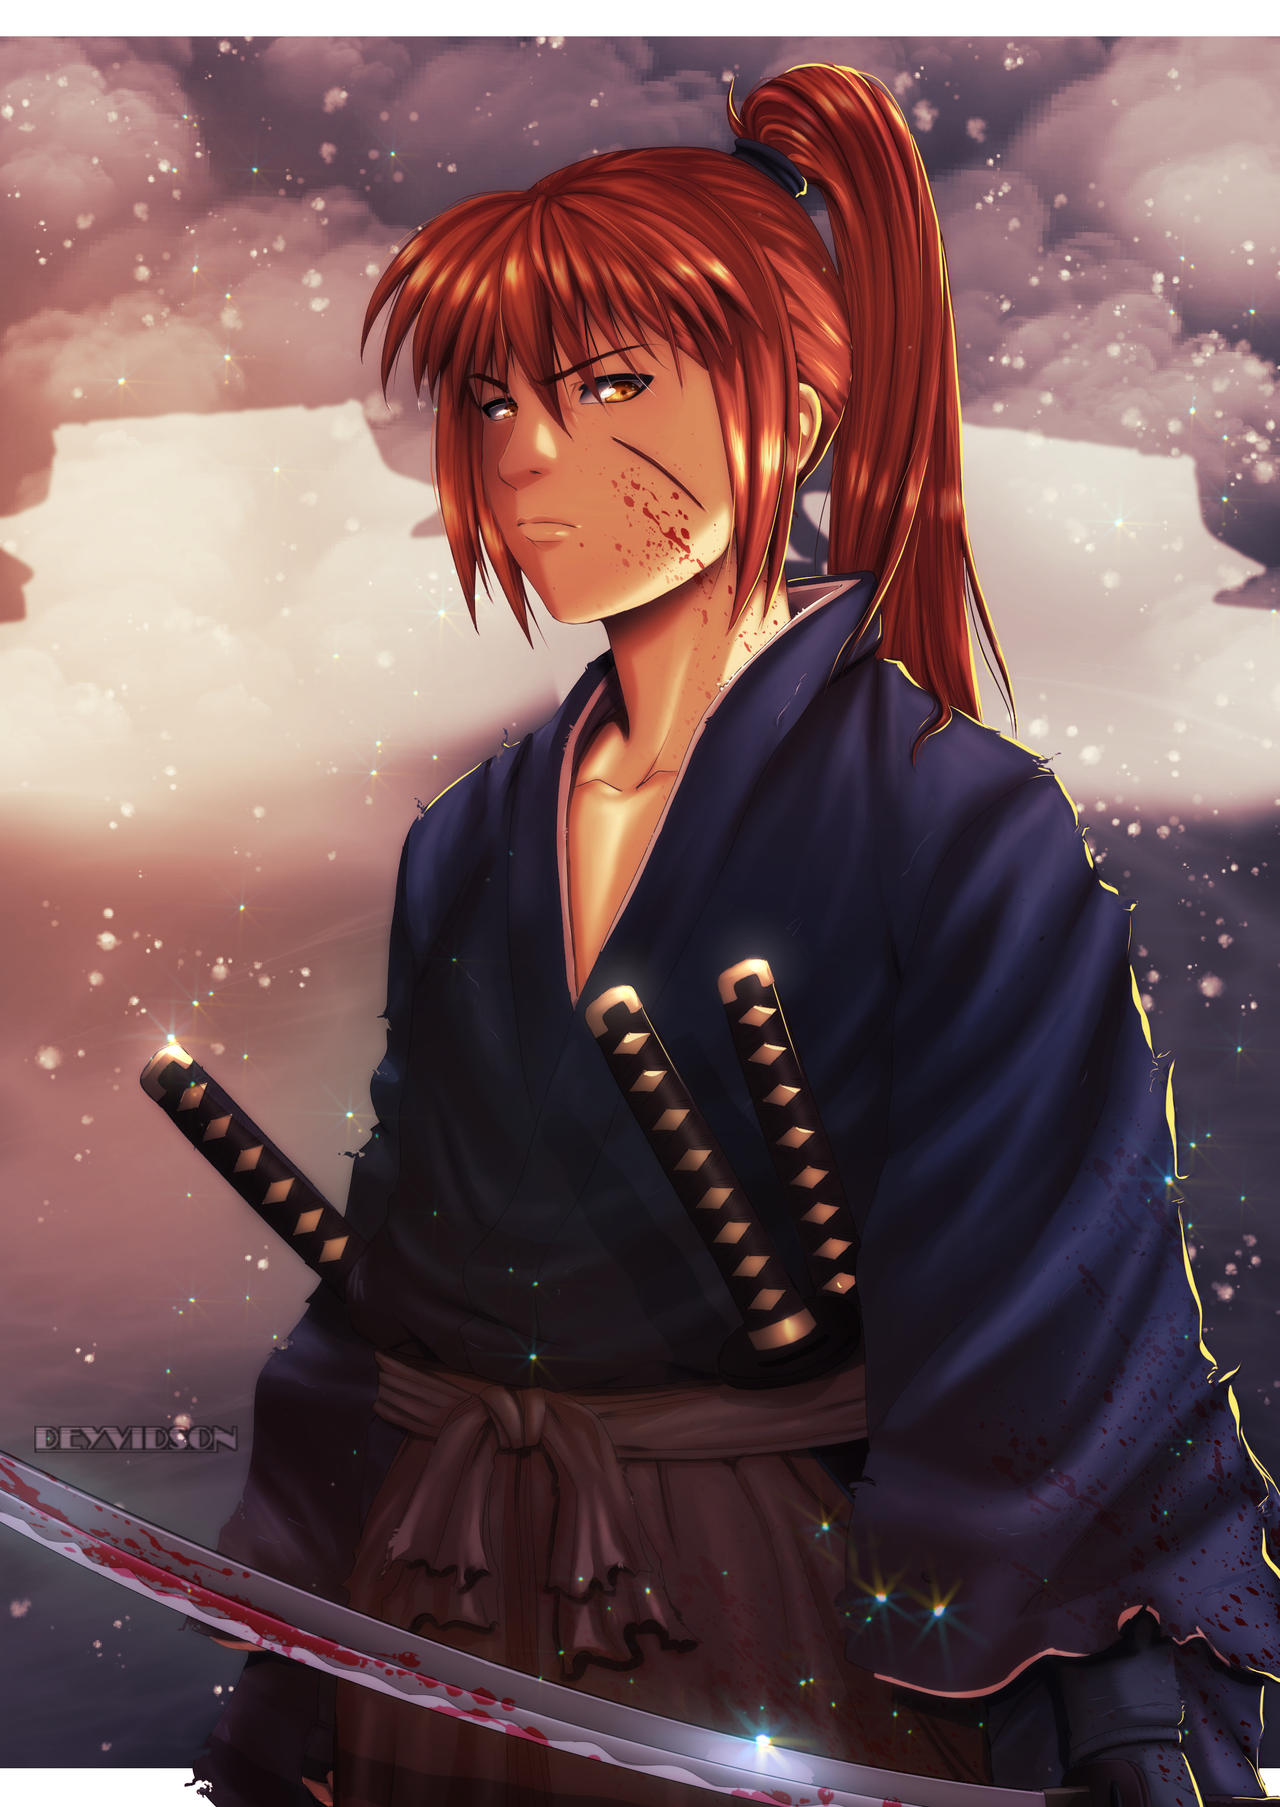 Kenshin Himura by BatesMotel on DeviantArt